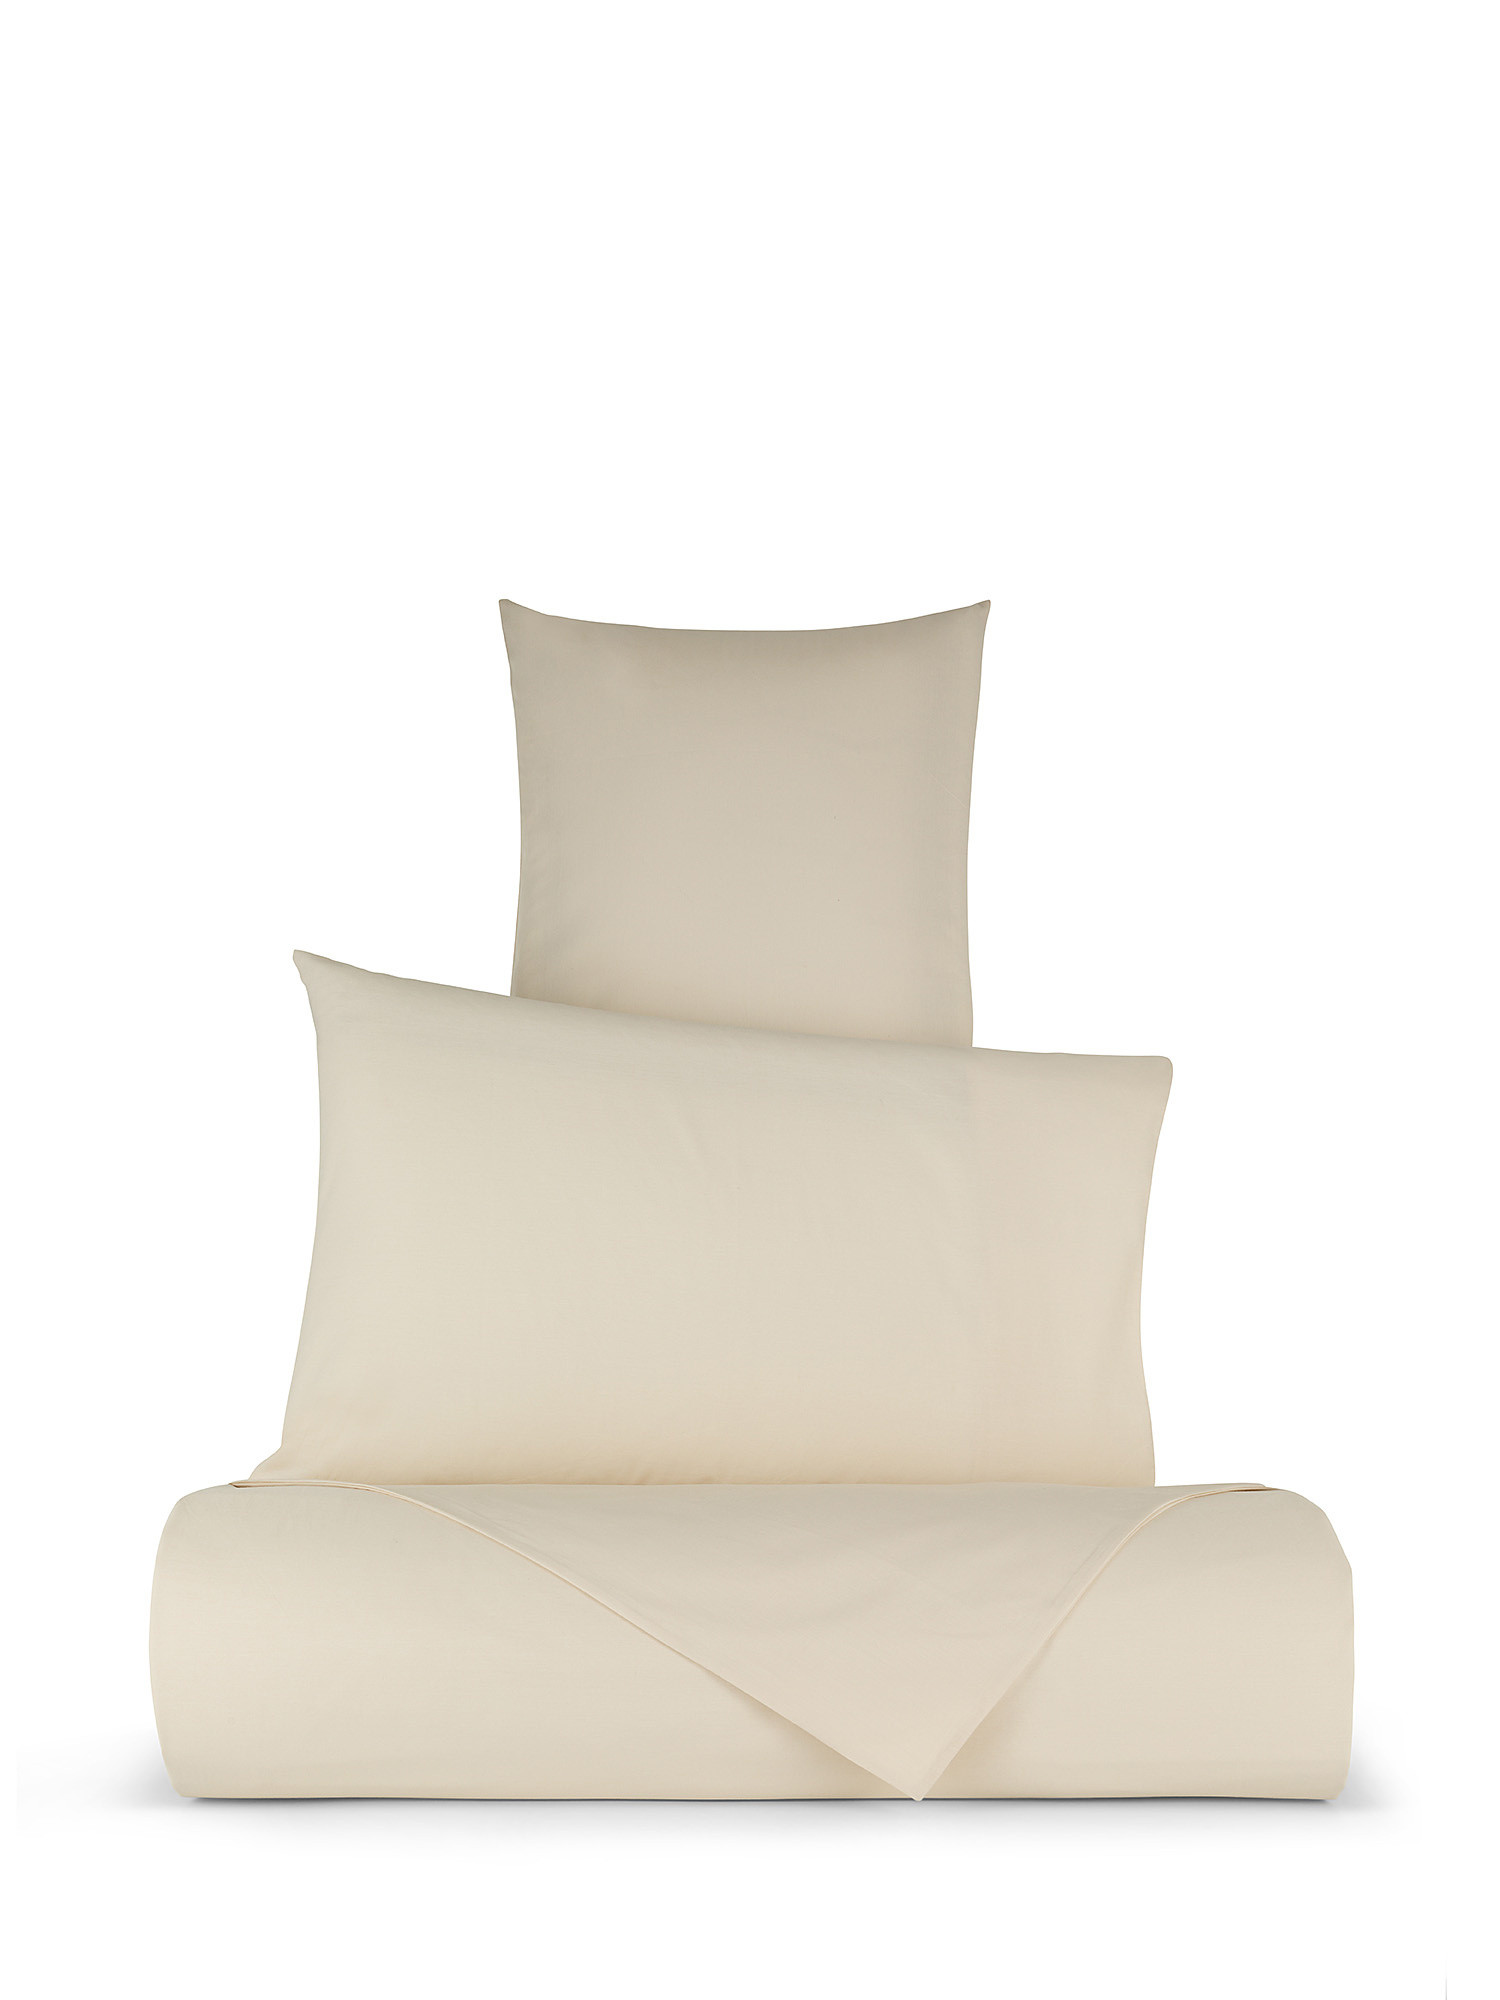 Solid color percale cotton duvet cover set, Beige, large image number 0